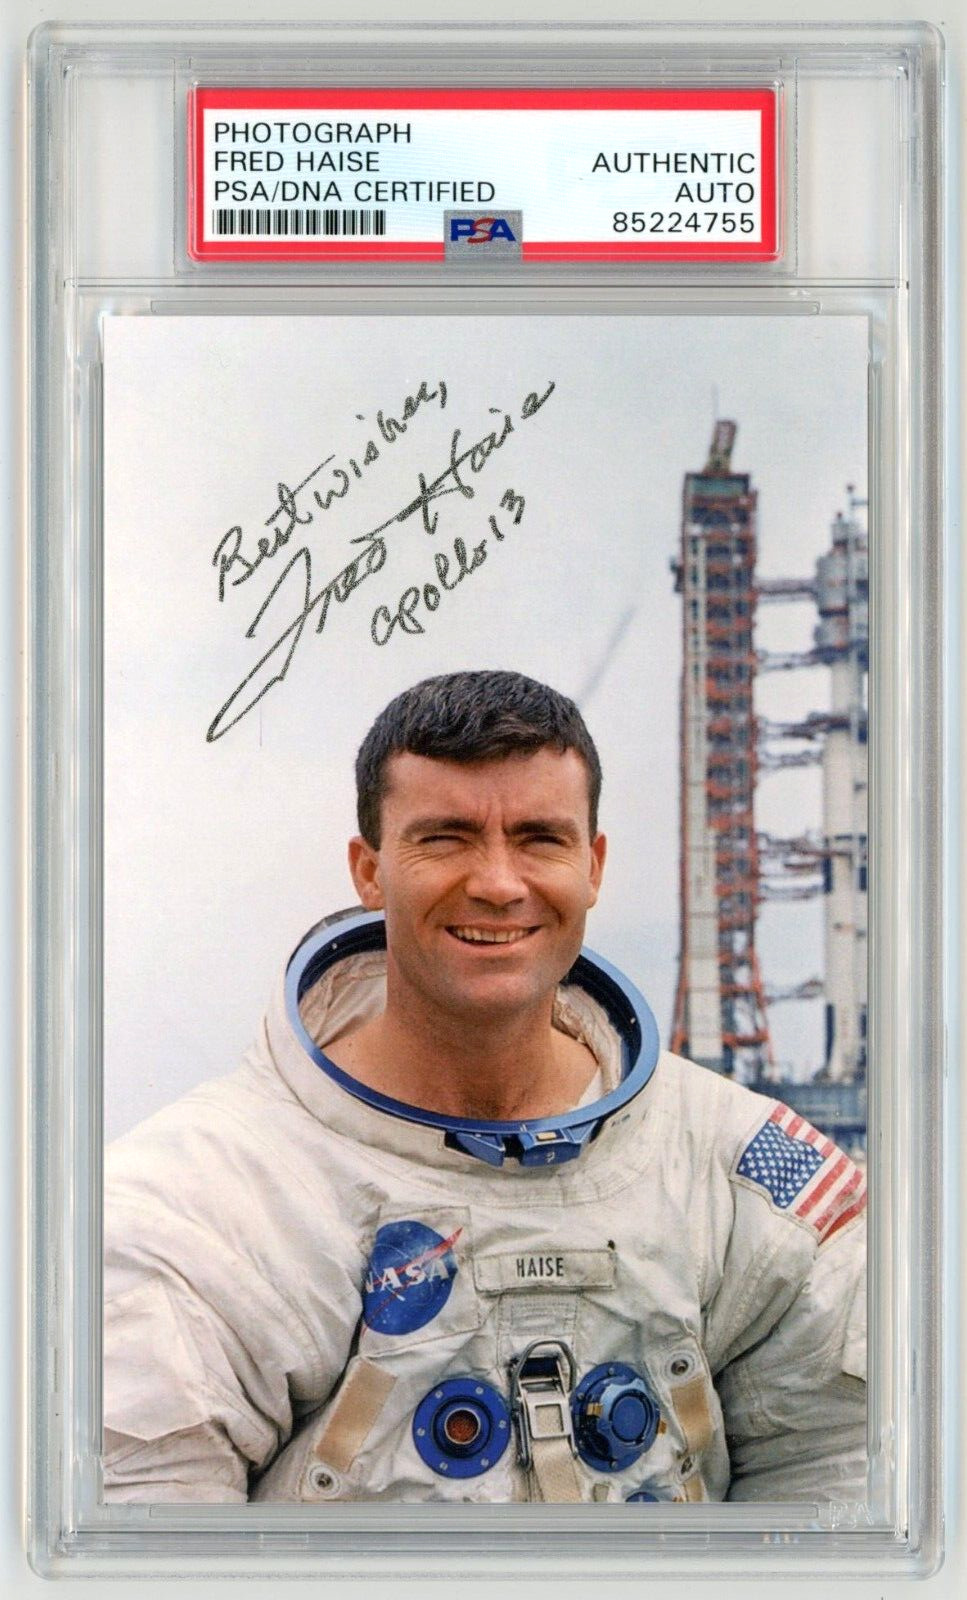 FRED HAISE Signed Photo w/ Apollo 13 Inscription - NASA Astronaut Portrait -PSA